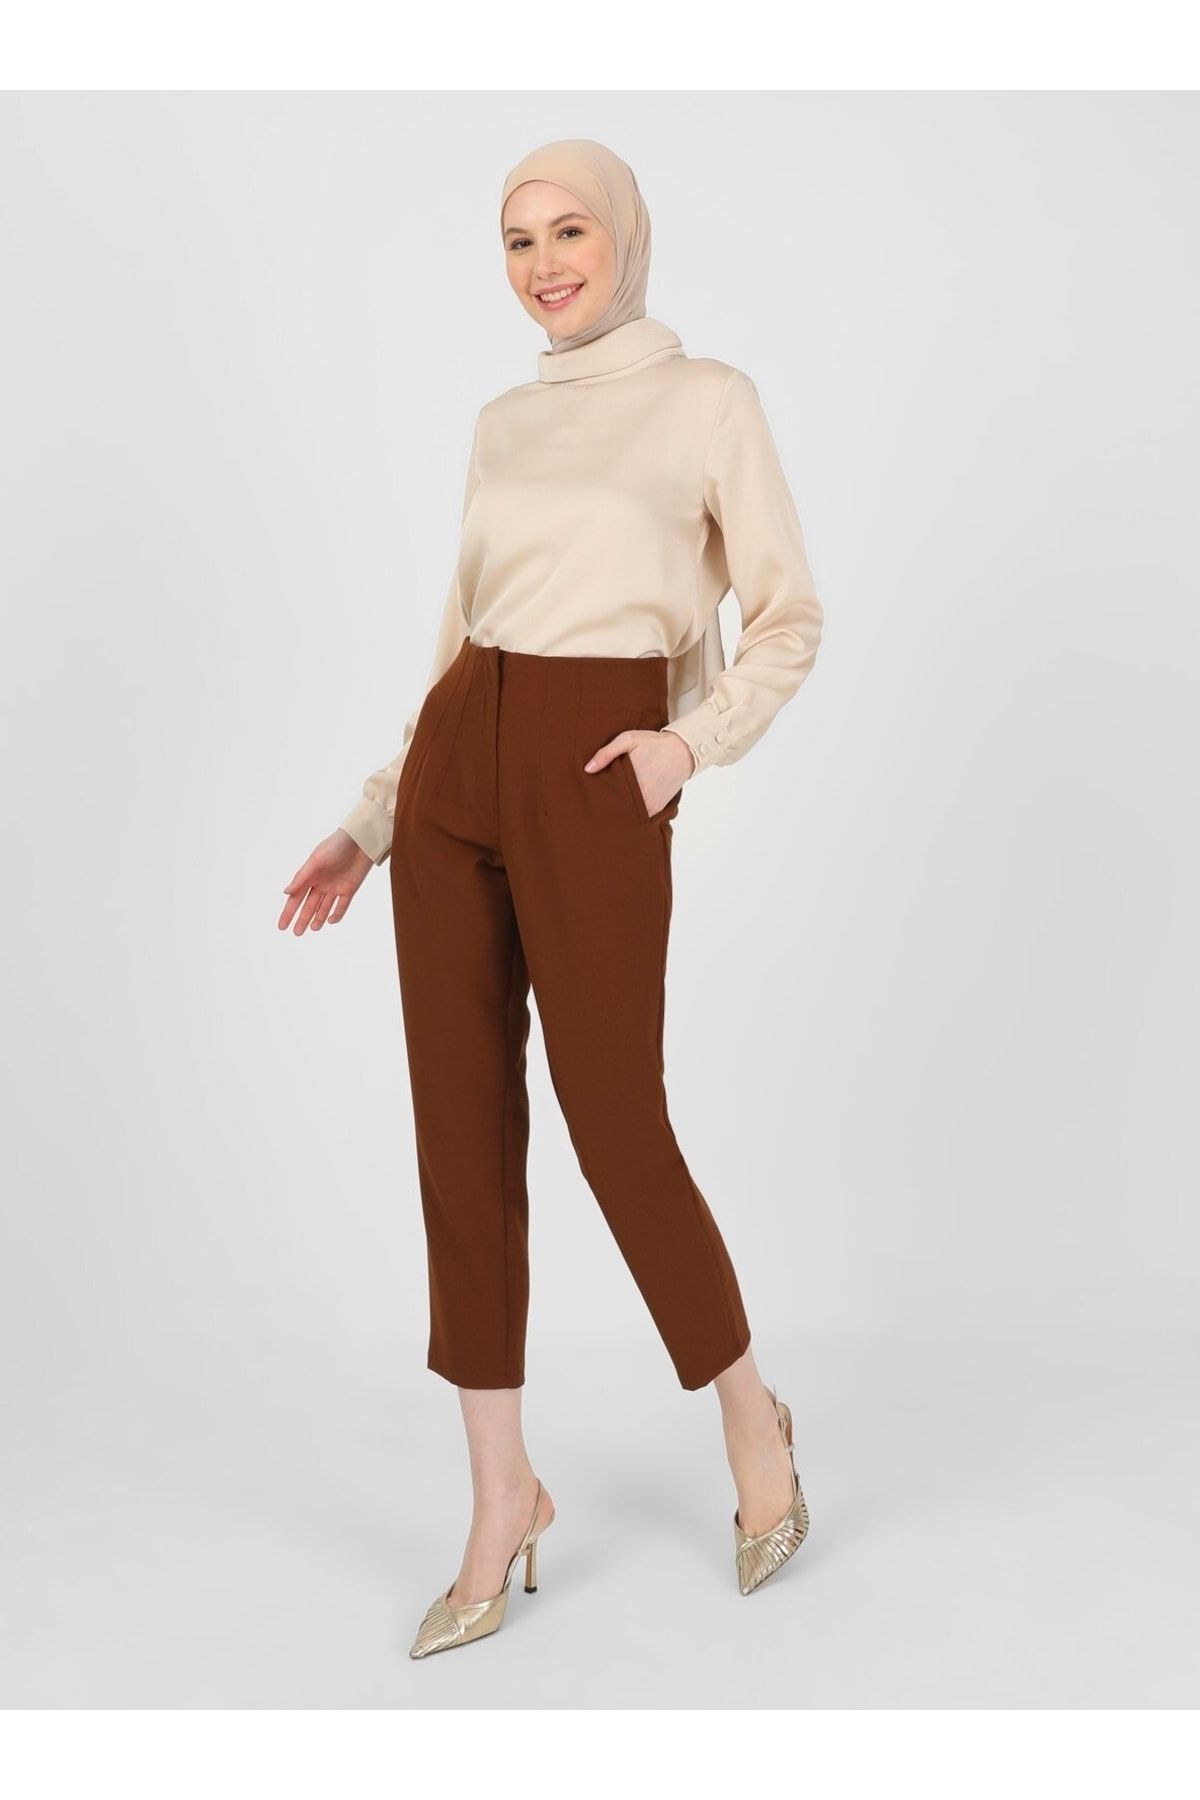 Refka Pens Detaylı Klasik Pantolon - Kahverengi - Woman